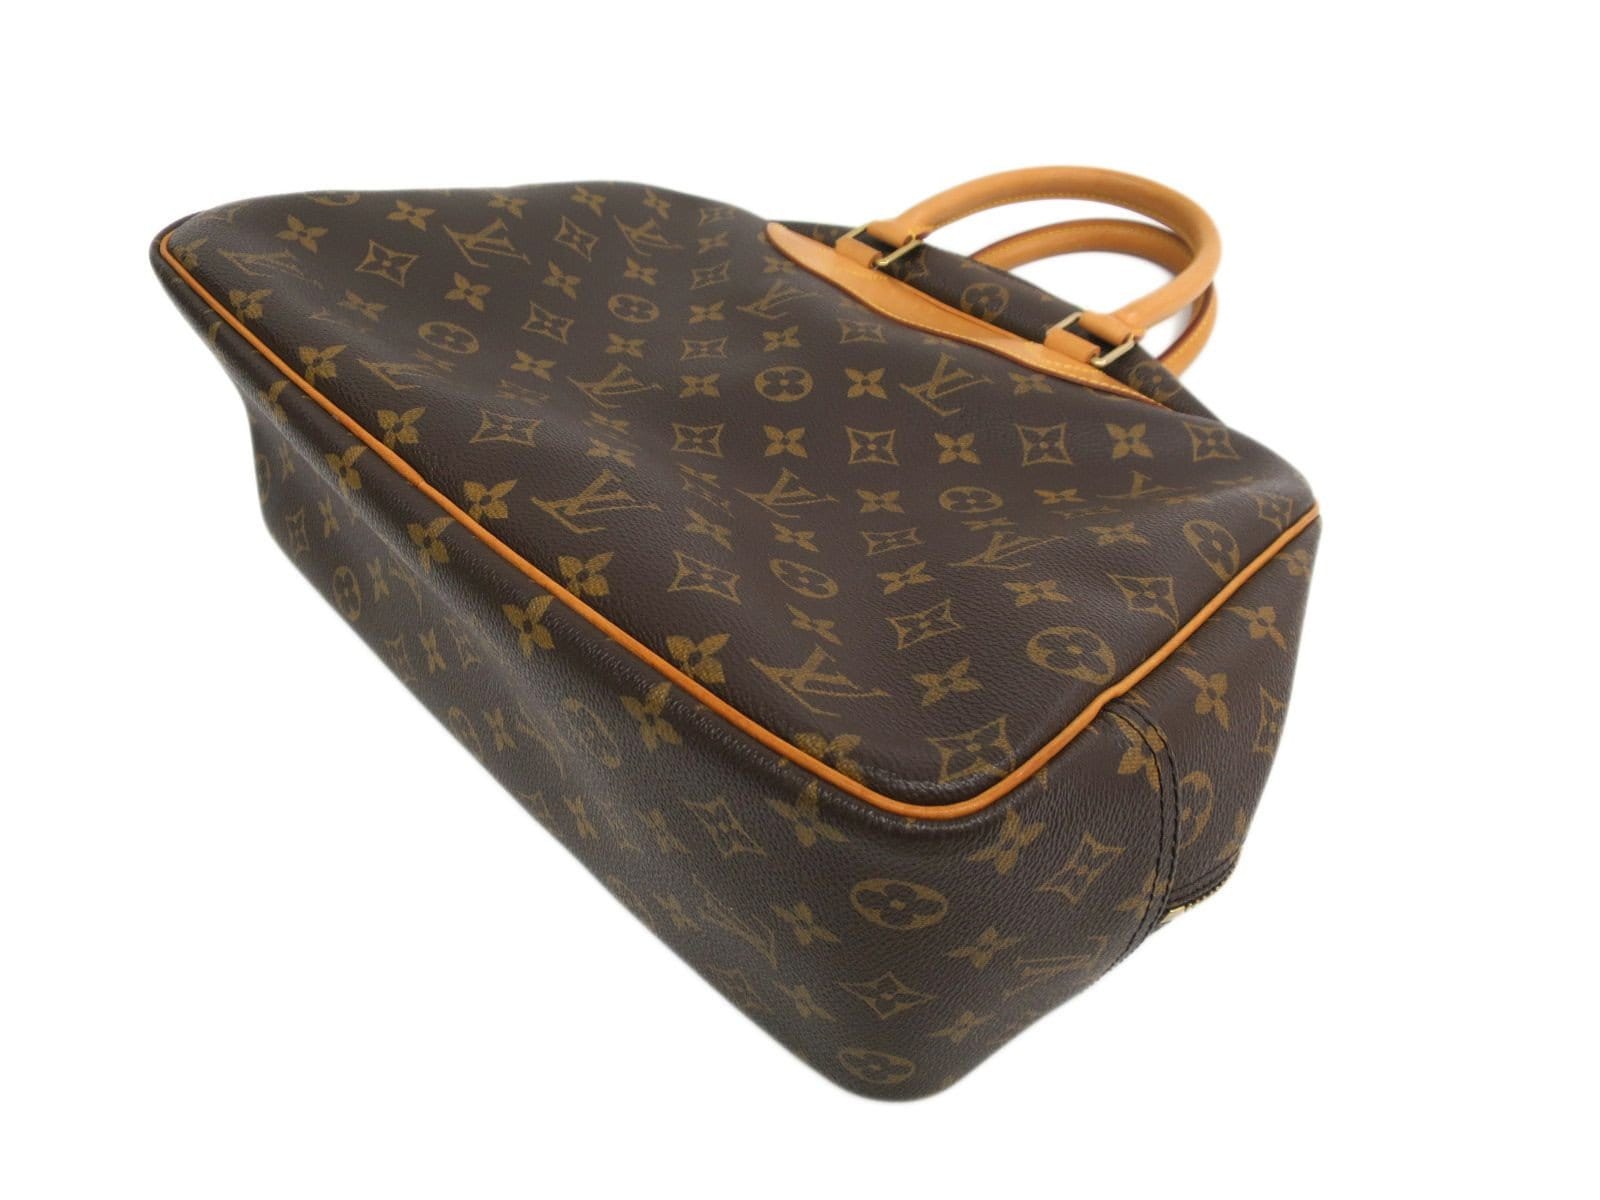 Louis Vuitton Deauville (Bowling Vanity) *No Key Women's Handbag M47270  Monogram (Brown)